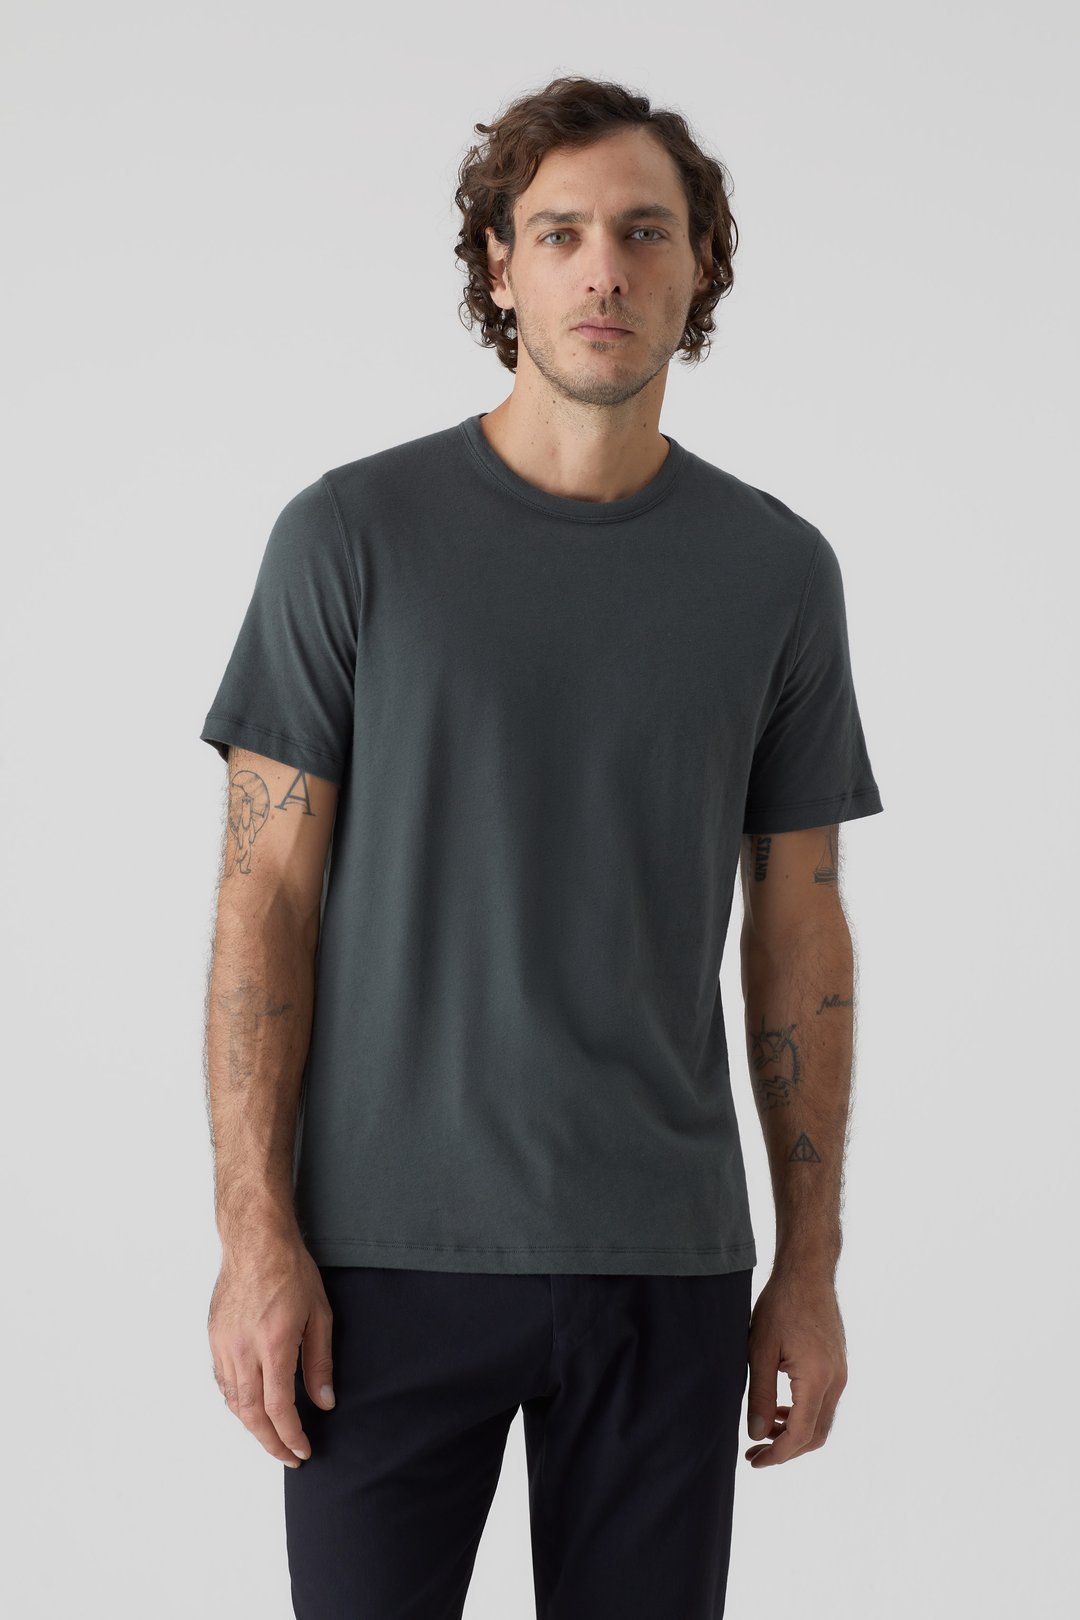 Mango T-shirt discount 63% Gray M WOMEN FASHION Shirts & T-shirts Basic 